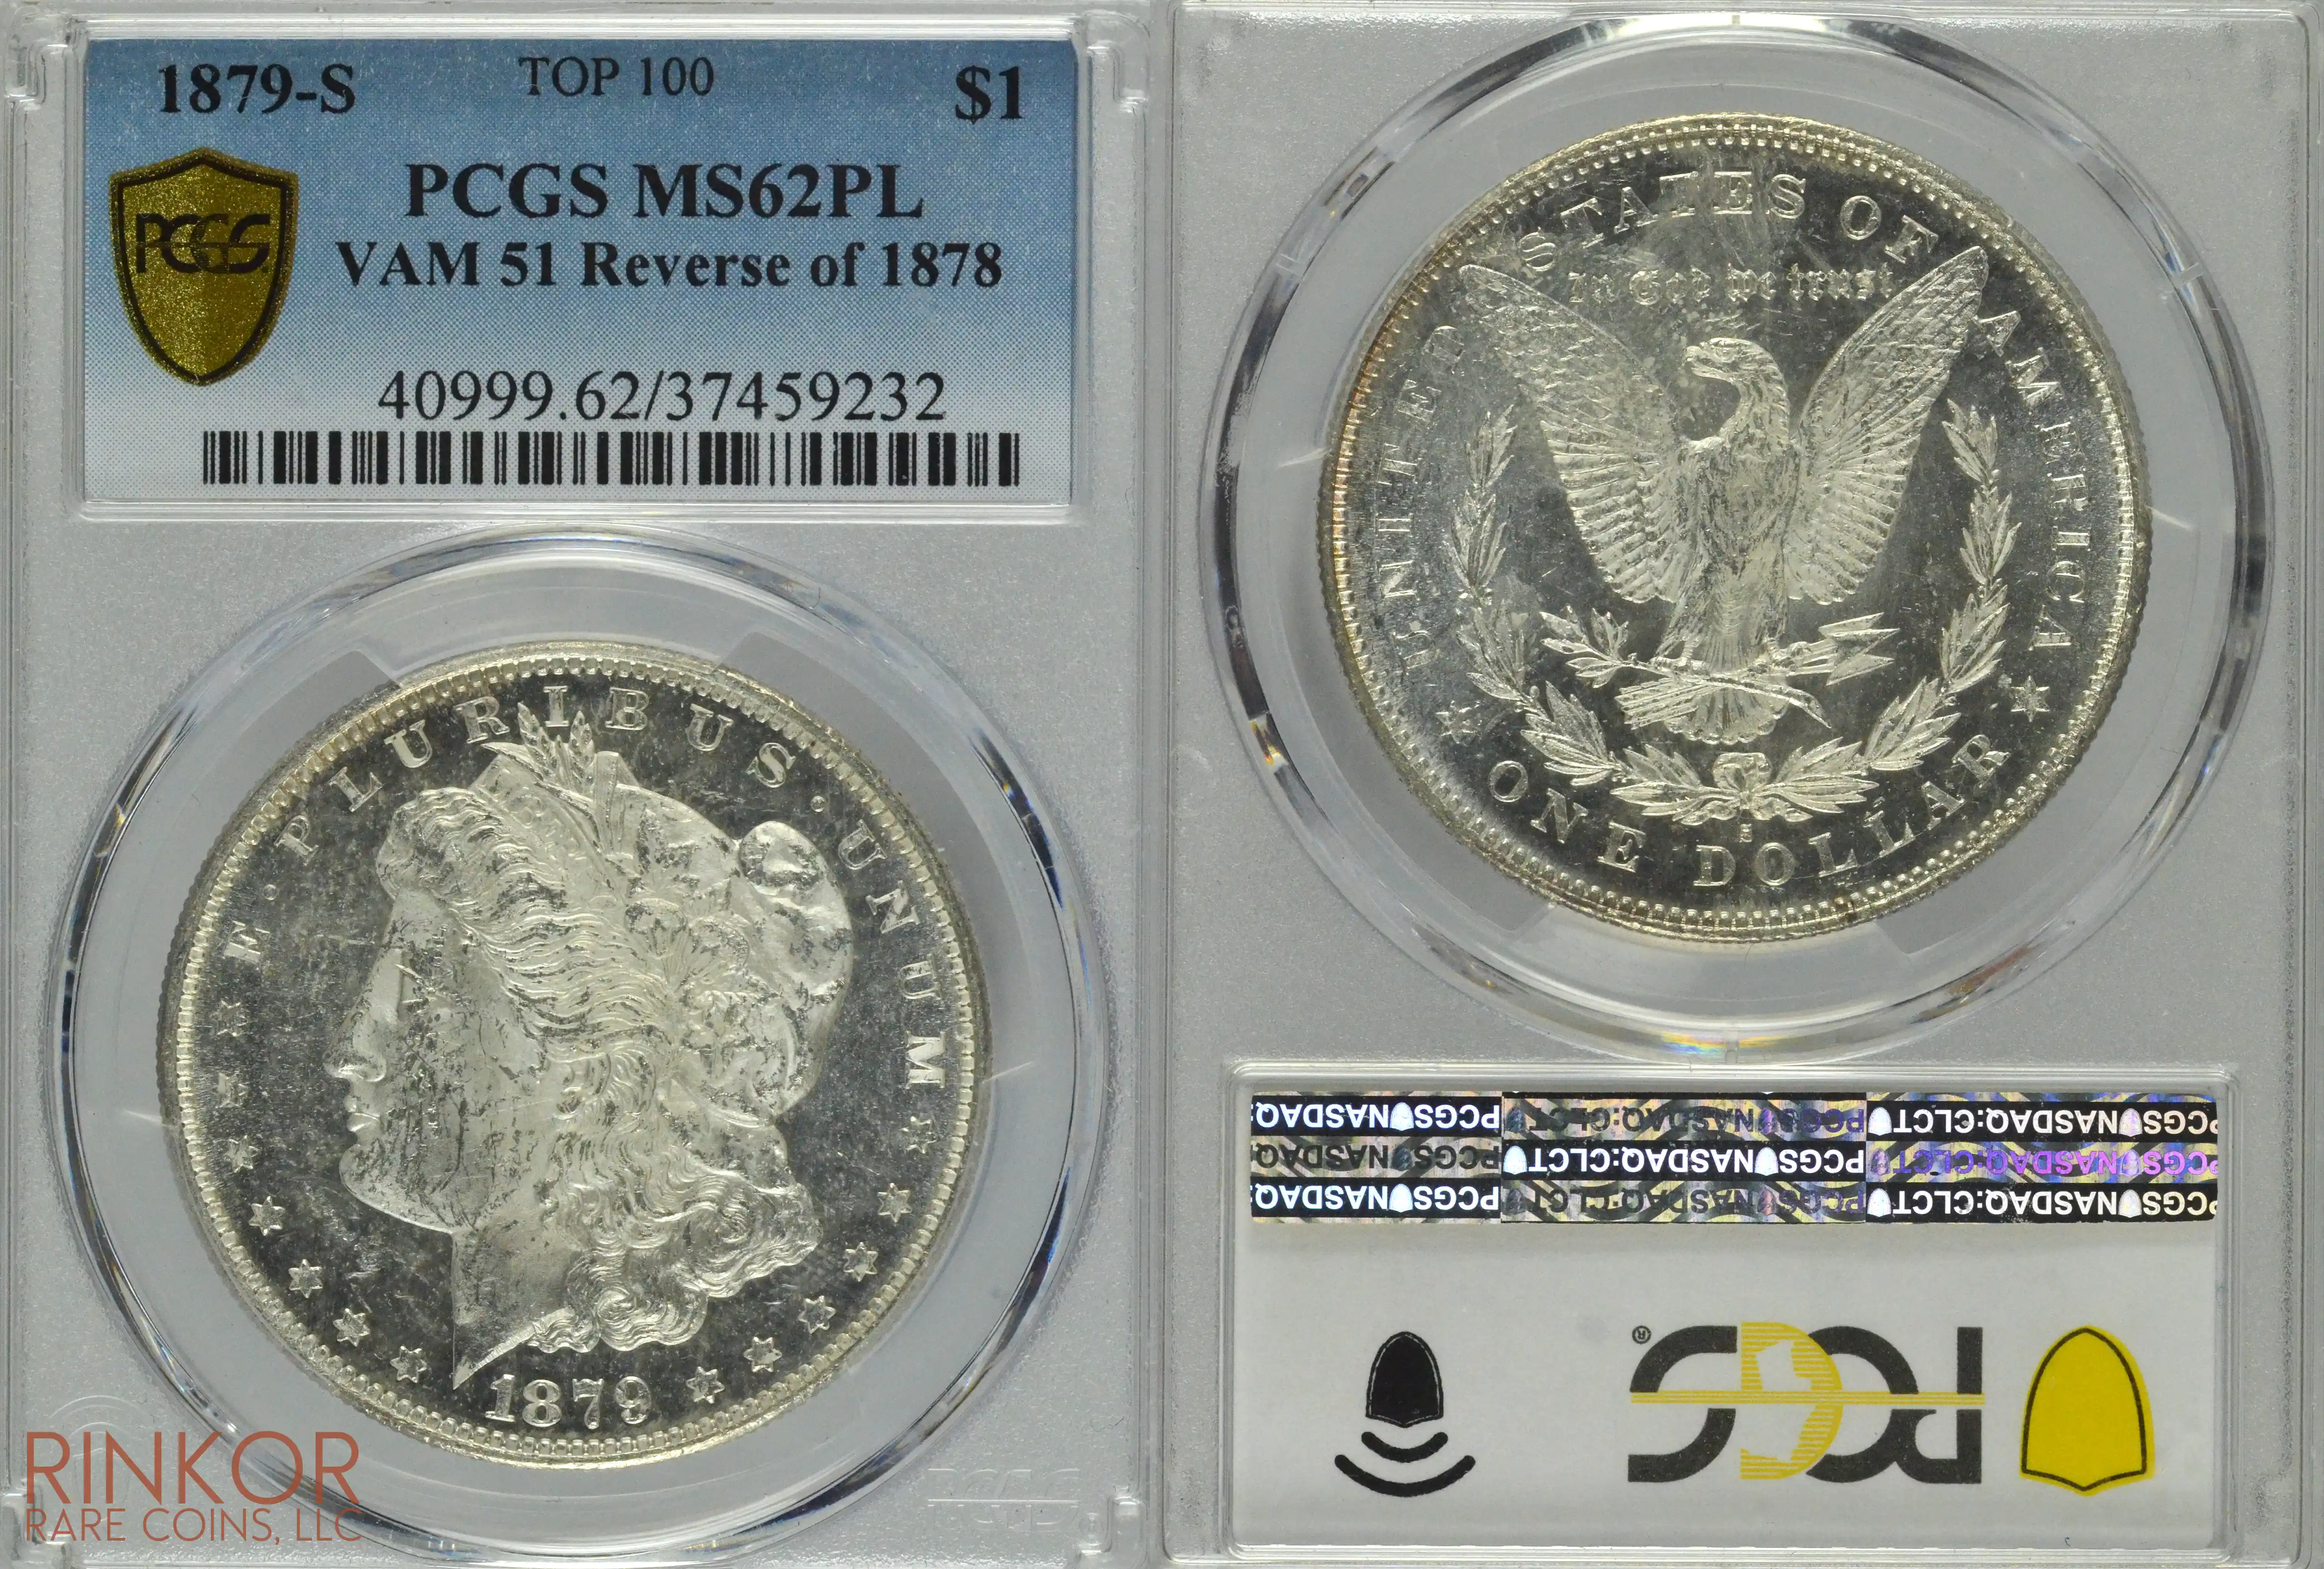 1879-S $1 VAM 51 Reverse of 1878 PCGS MS 62 PL